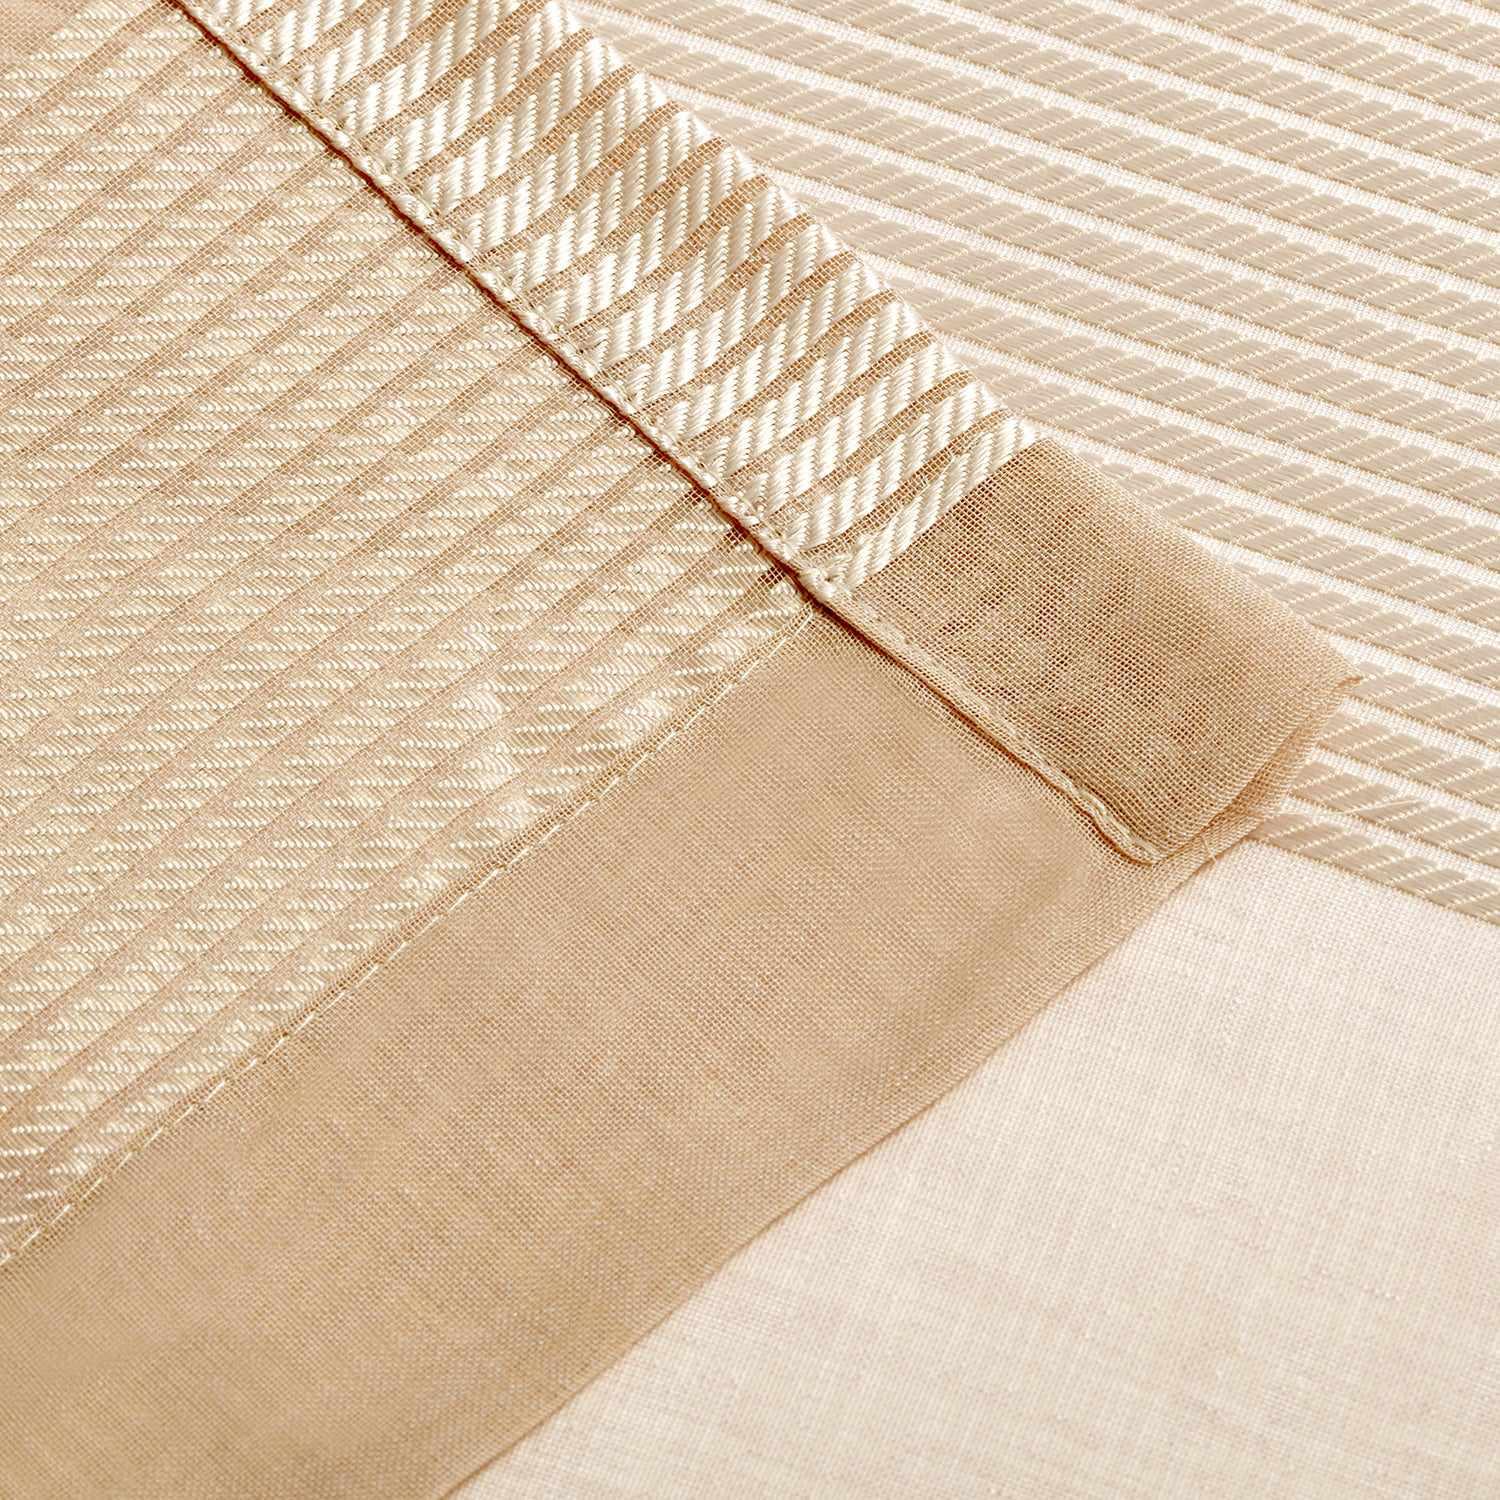 Dalisto Stripes 2-Piece Grommet Sheer Curtain Panel Set - Ecru